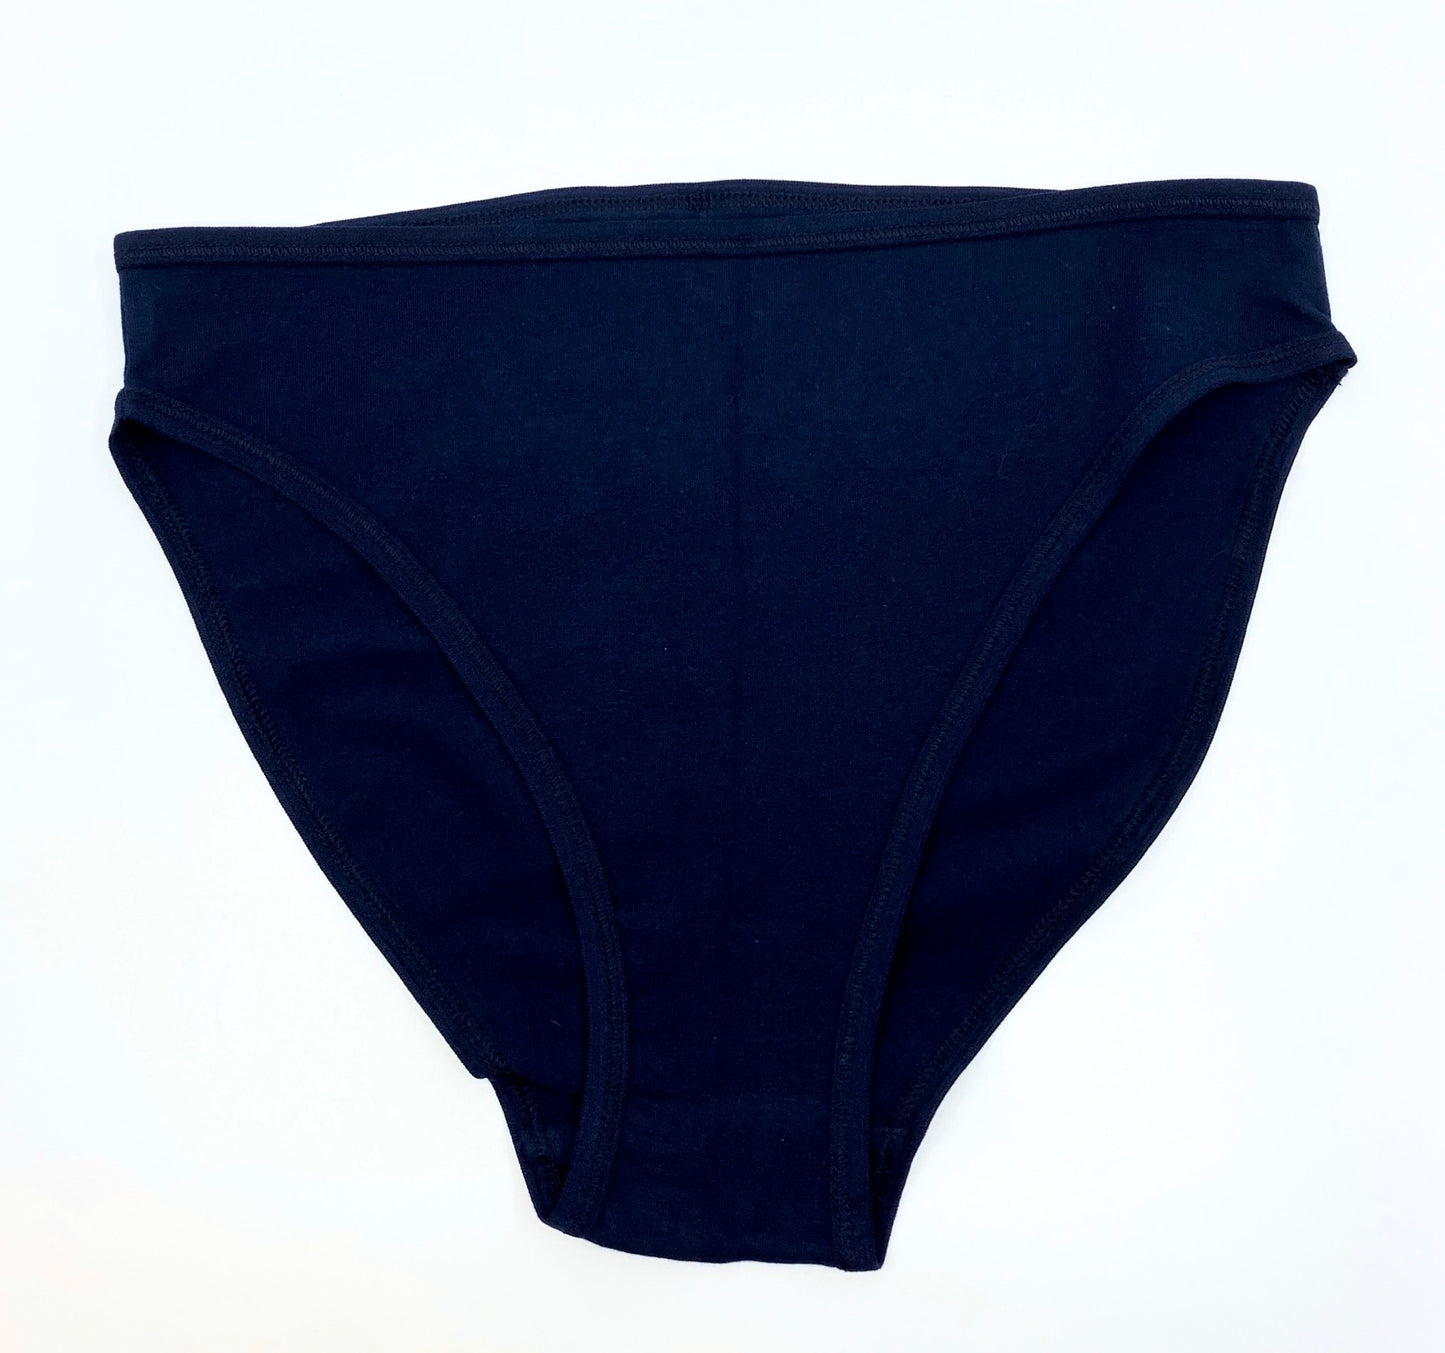 Women's organic cotton mid-rise bikini bottoms in navy blue